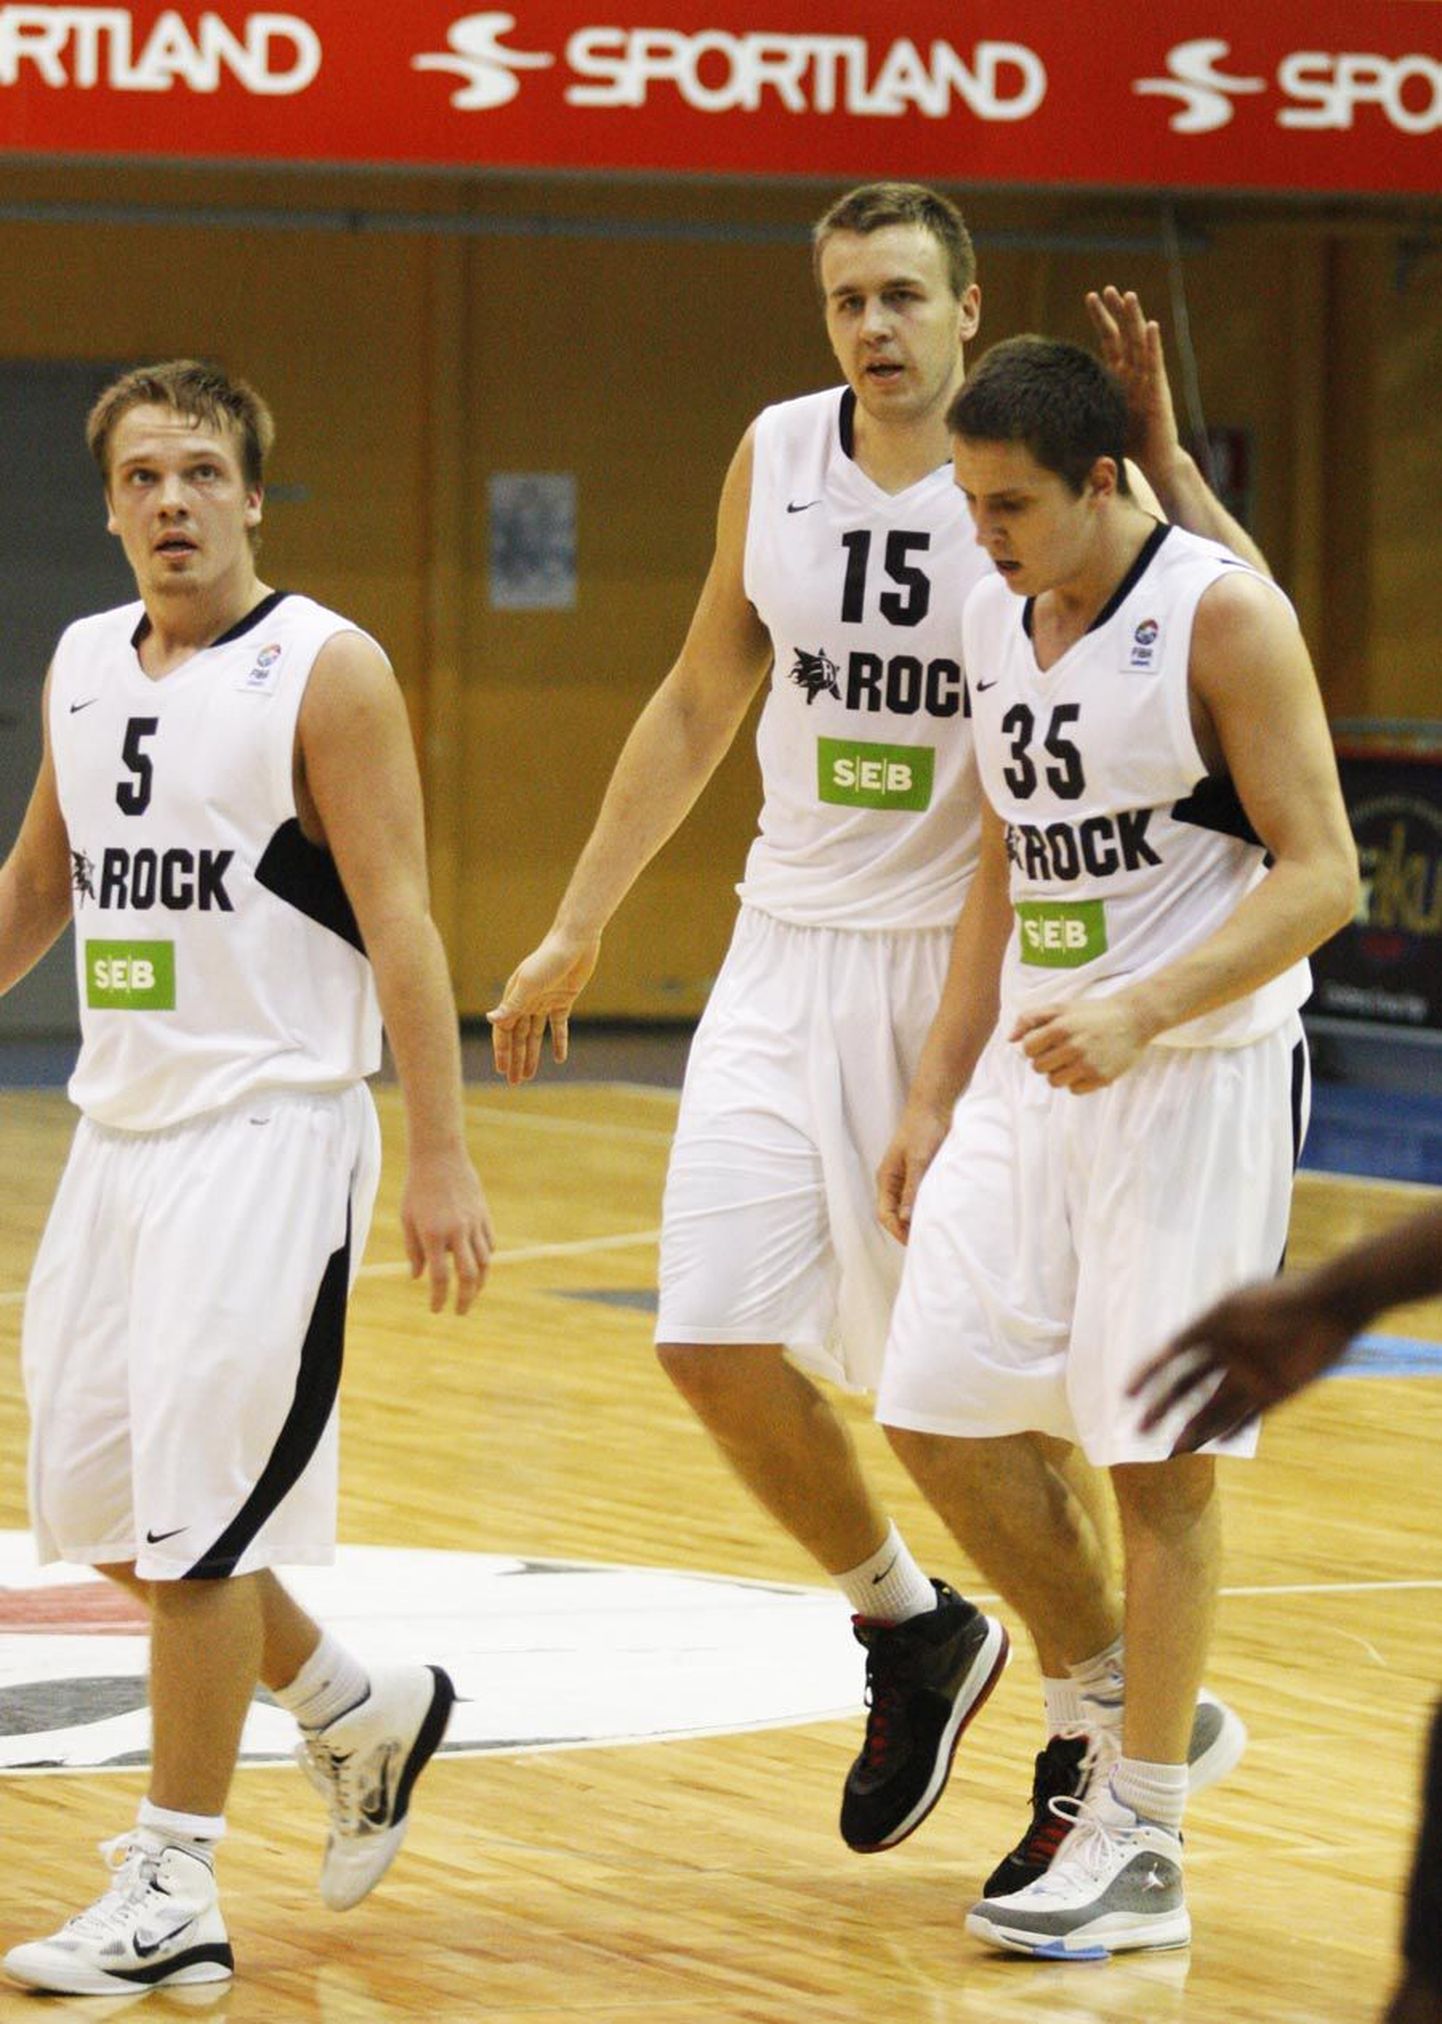 Rocki mängumehed Sten-Timmu Sokk (vasakul), Janar Talts (keskel) ja Rain Veideman.